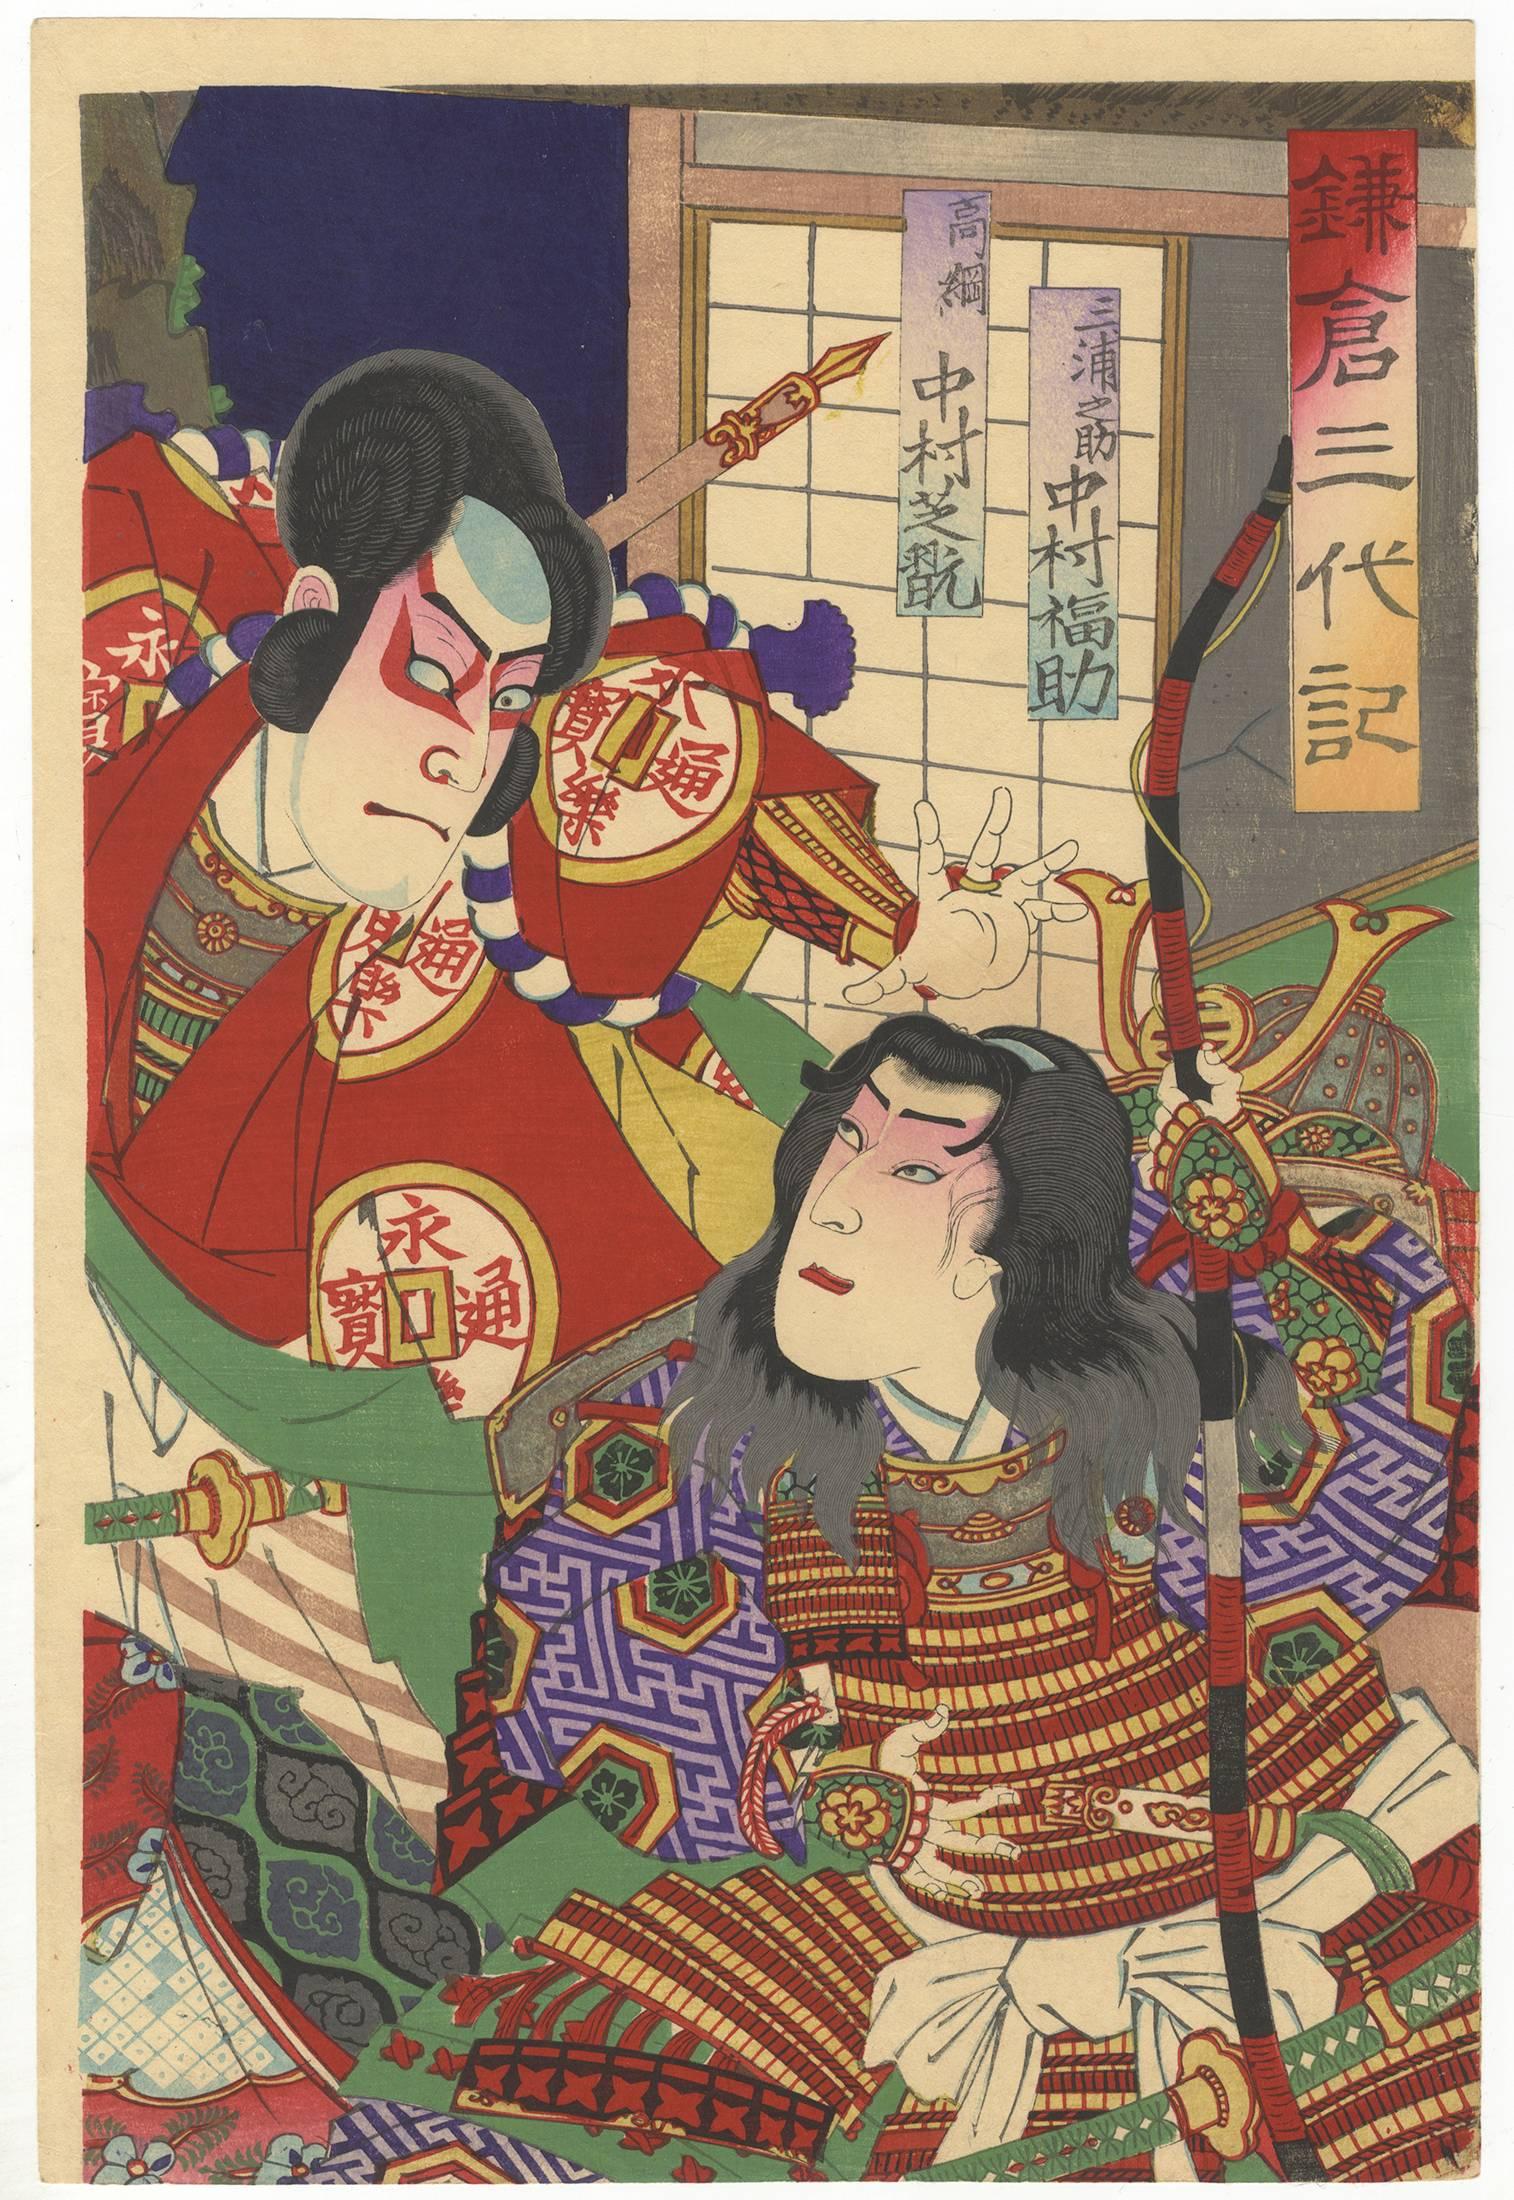 Artist: Kachoro / Kunisada II (1823-1880)
Title: Three Honorable Stories in Kamakura
Date: 1891
Publisher: Morishita Junzaburo
(R) 25 x 37.4 (C) 24.9 x 37.4 (L) 25.1 x 37.2